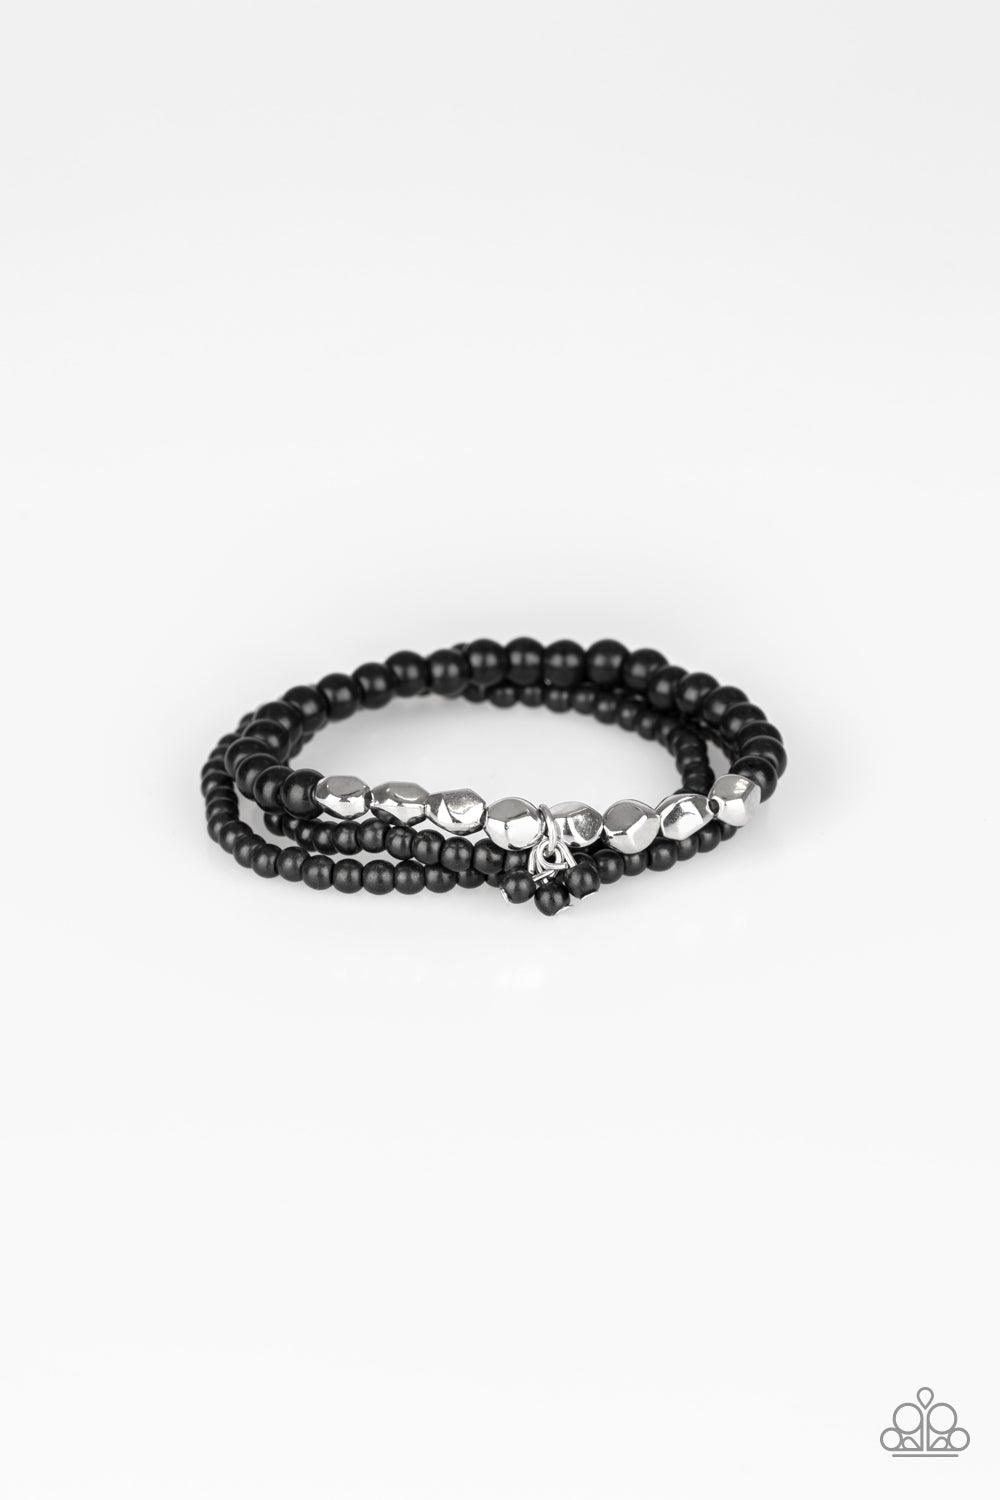 Paparazzi Accessories Tour de Tranquility - Black Bracelet - jewelrybybretta